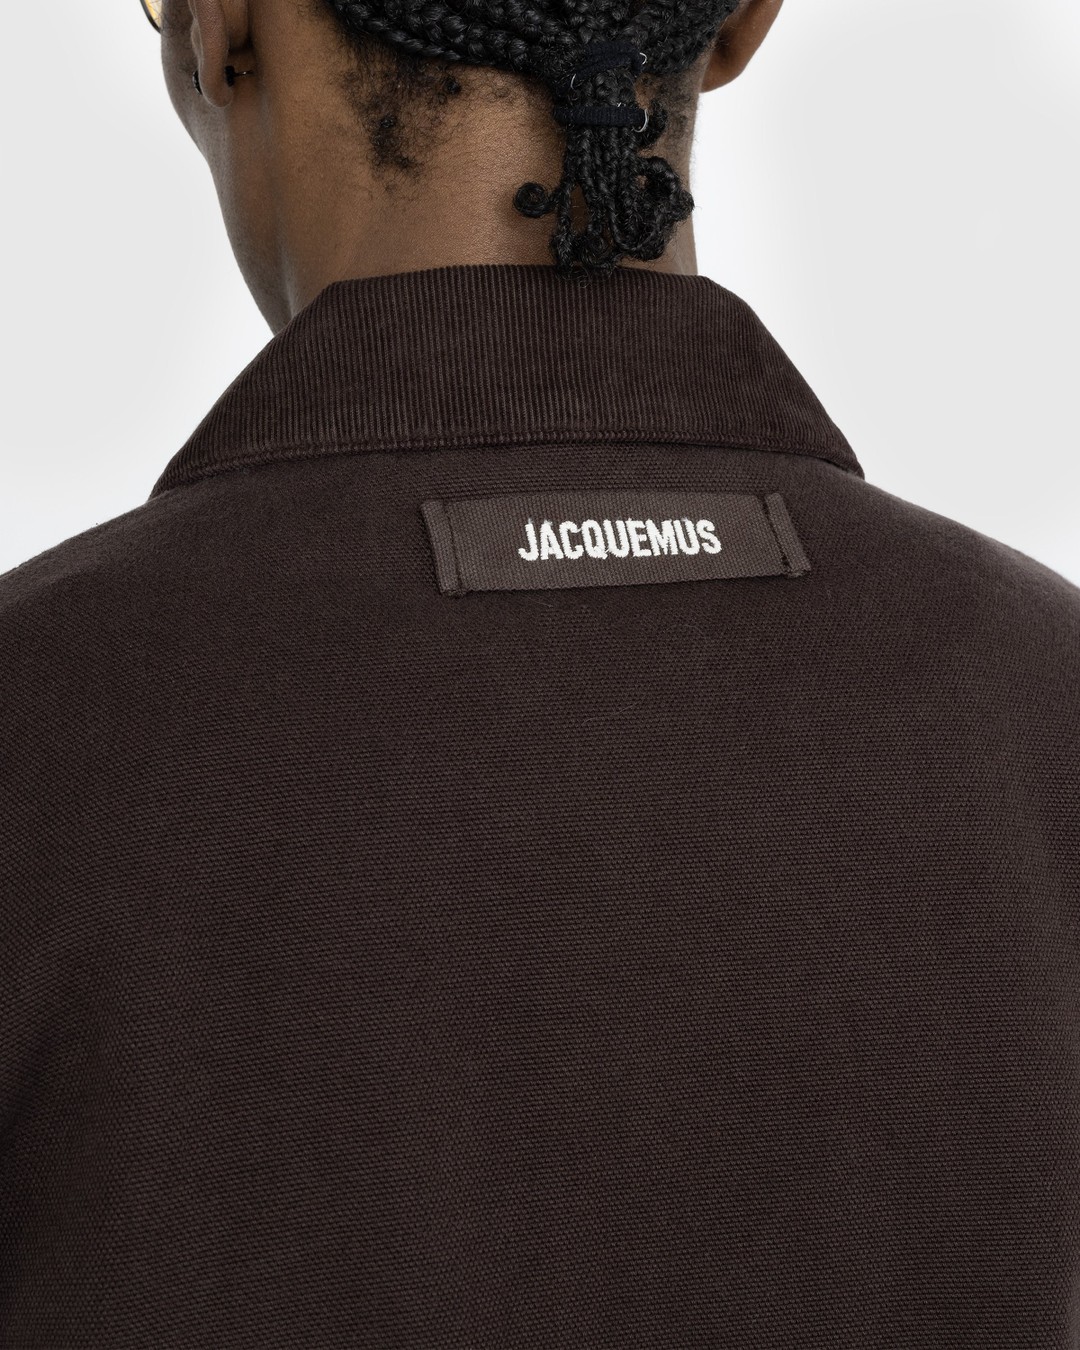 JACQUEMUS – Le Blouson Trivela Dark Brown - Outerwear - Brown - Image 4